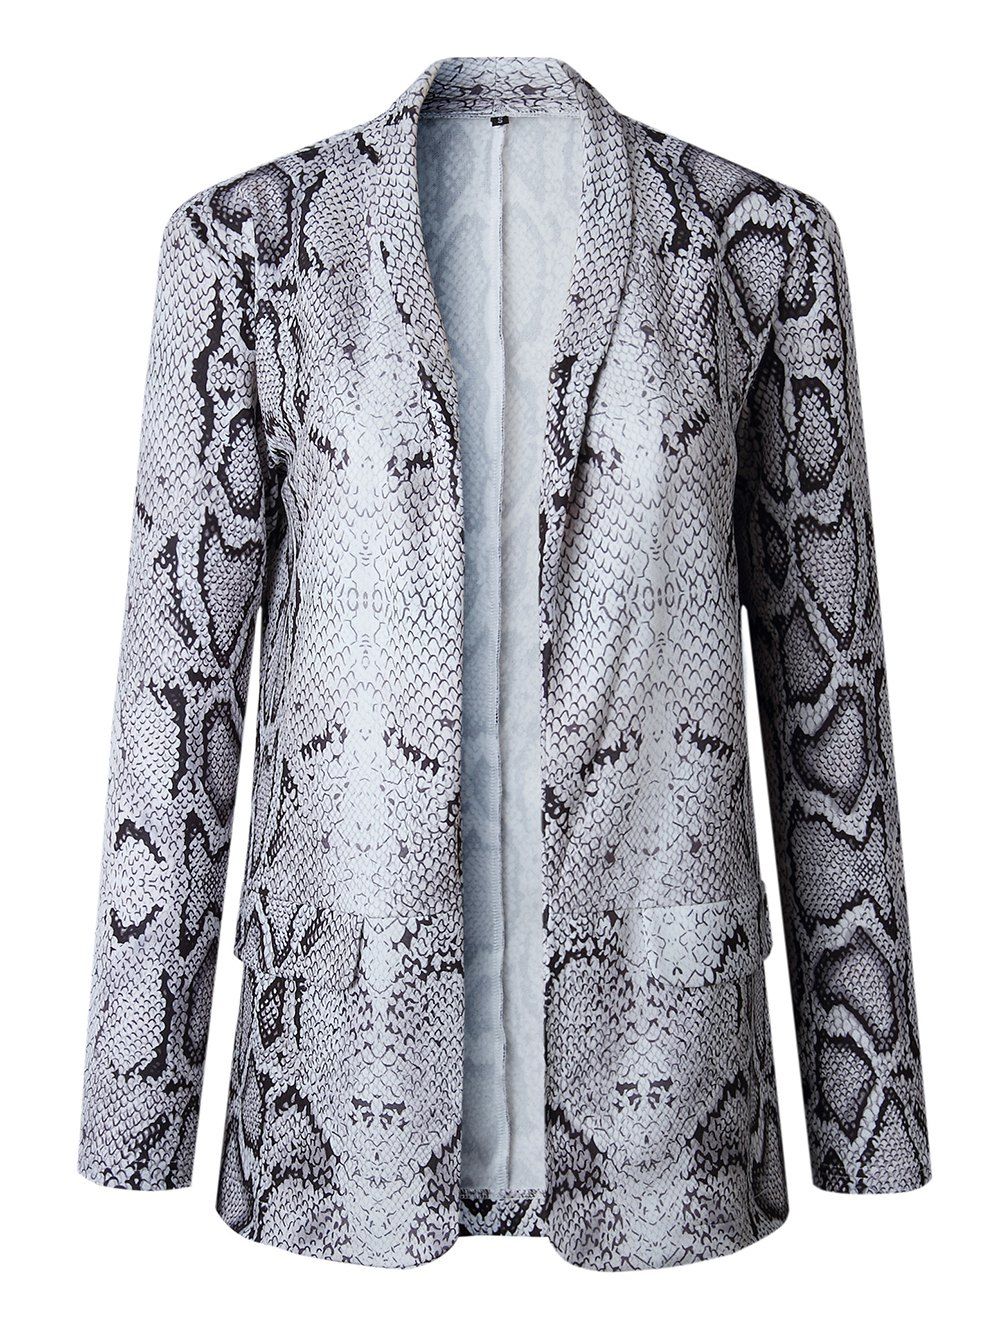 [30% OFF] Women Fashion Animal Print Leopard Cheetah Formal Suit Jacket ...